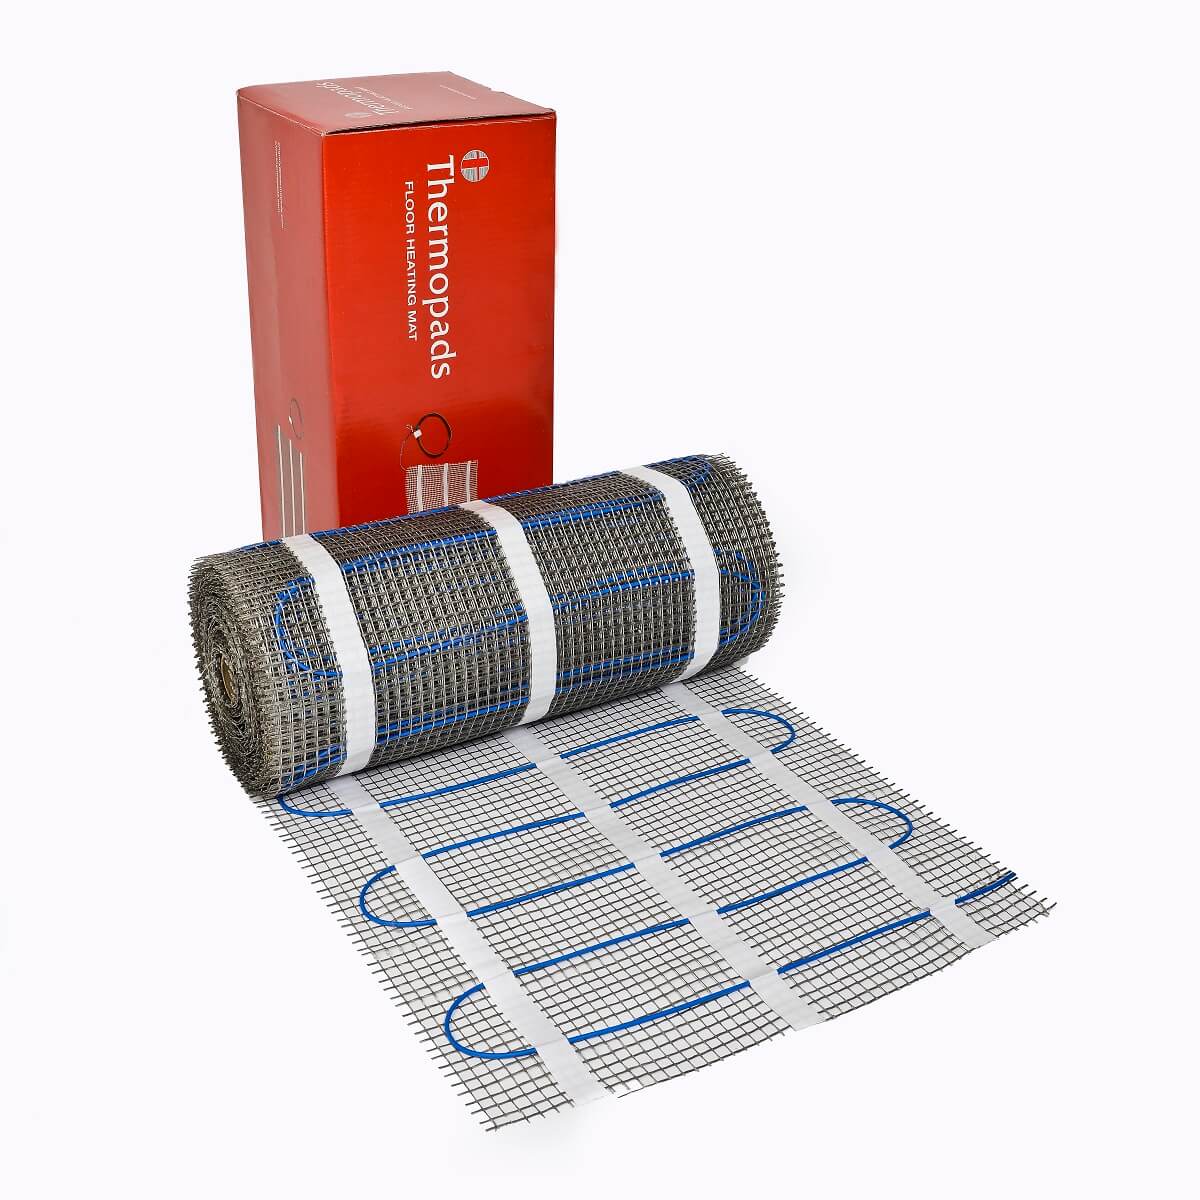 Thermopads Undertile Heating Mat - 2.5m2 500W (11174)